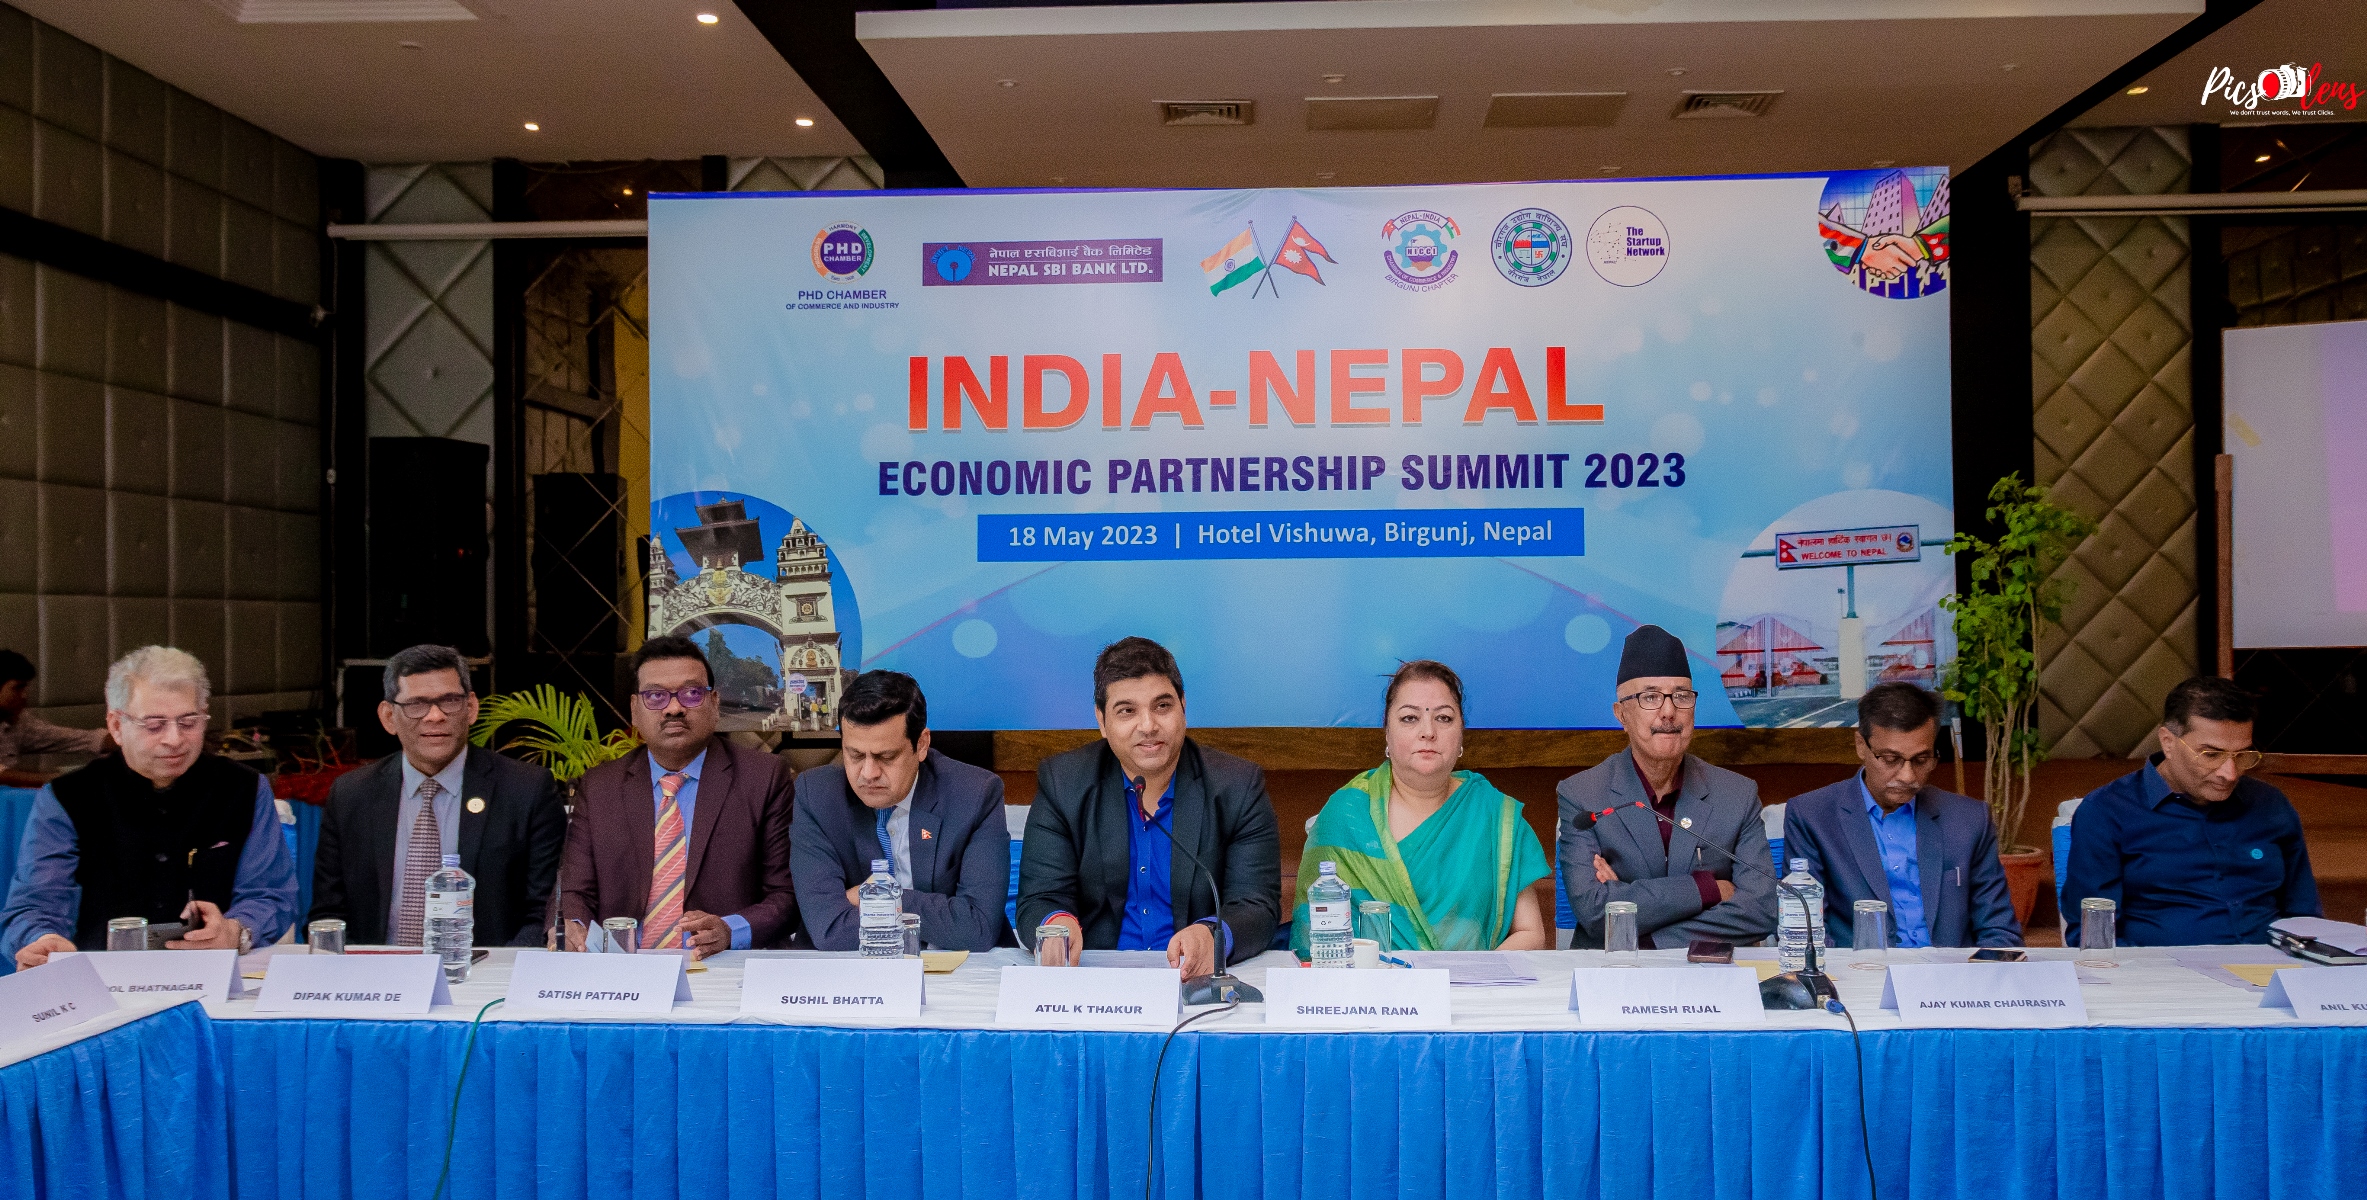 PRESS RELEASE - “India-Nepal Economic Partnership Summit 2023” organized at Birgunj, Nepal in 18th May 2023.